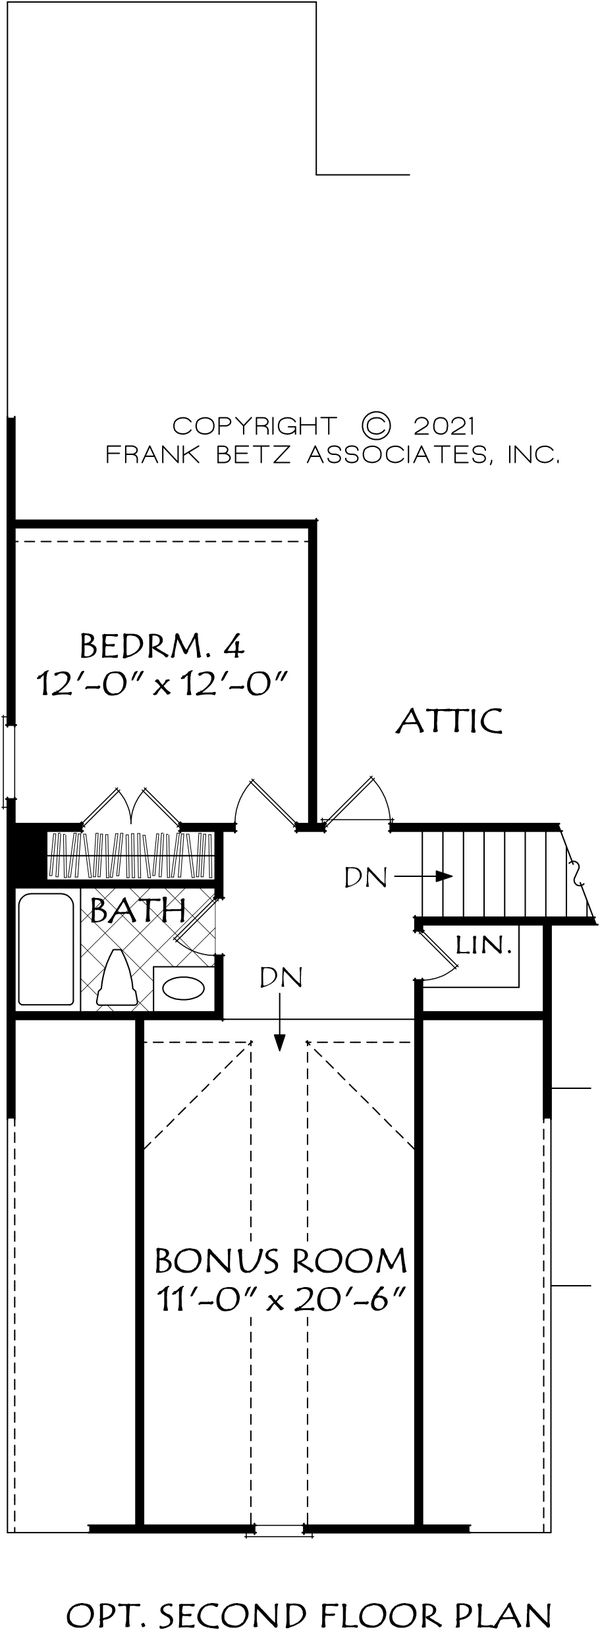 House Design - Optional 2nd Floor